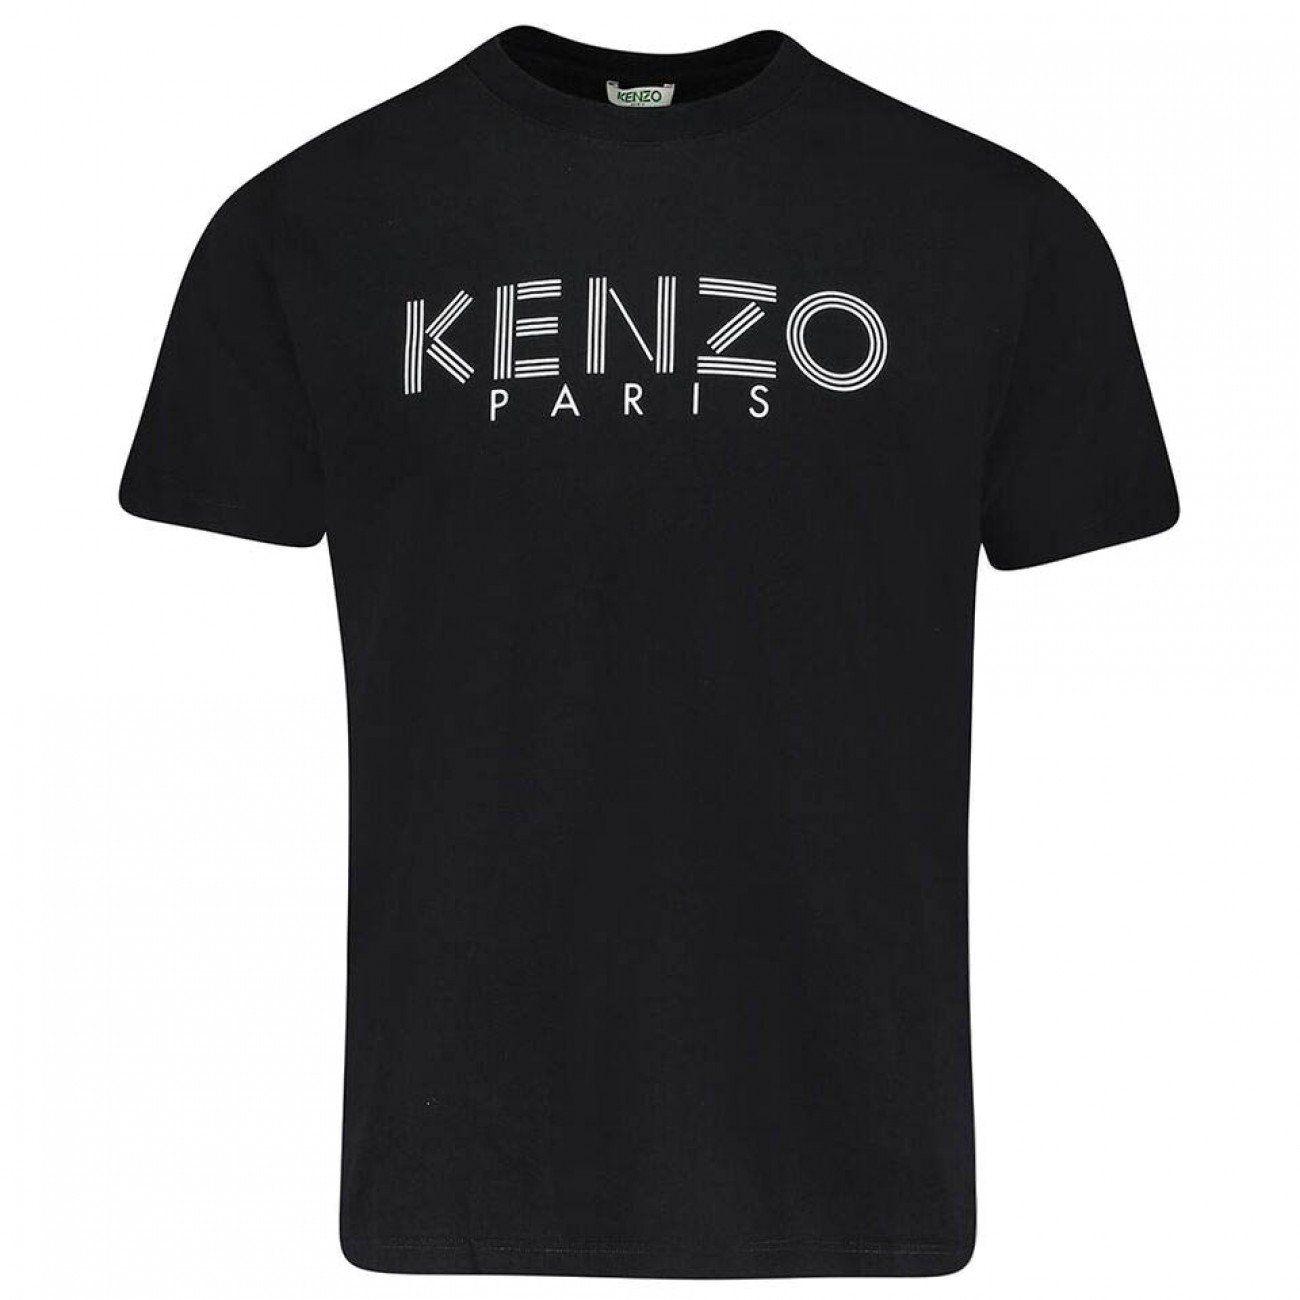 Kenzo Paris Logo - Kenzo Paris Logo Print T Shirt Black